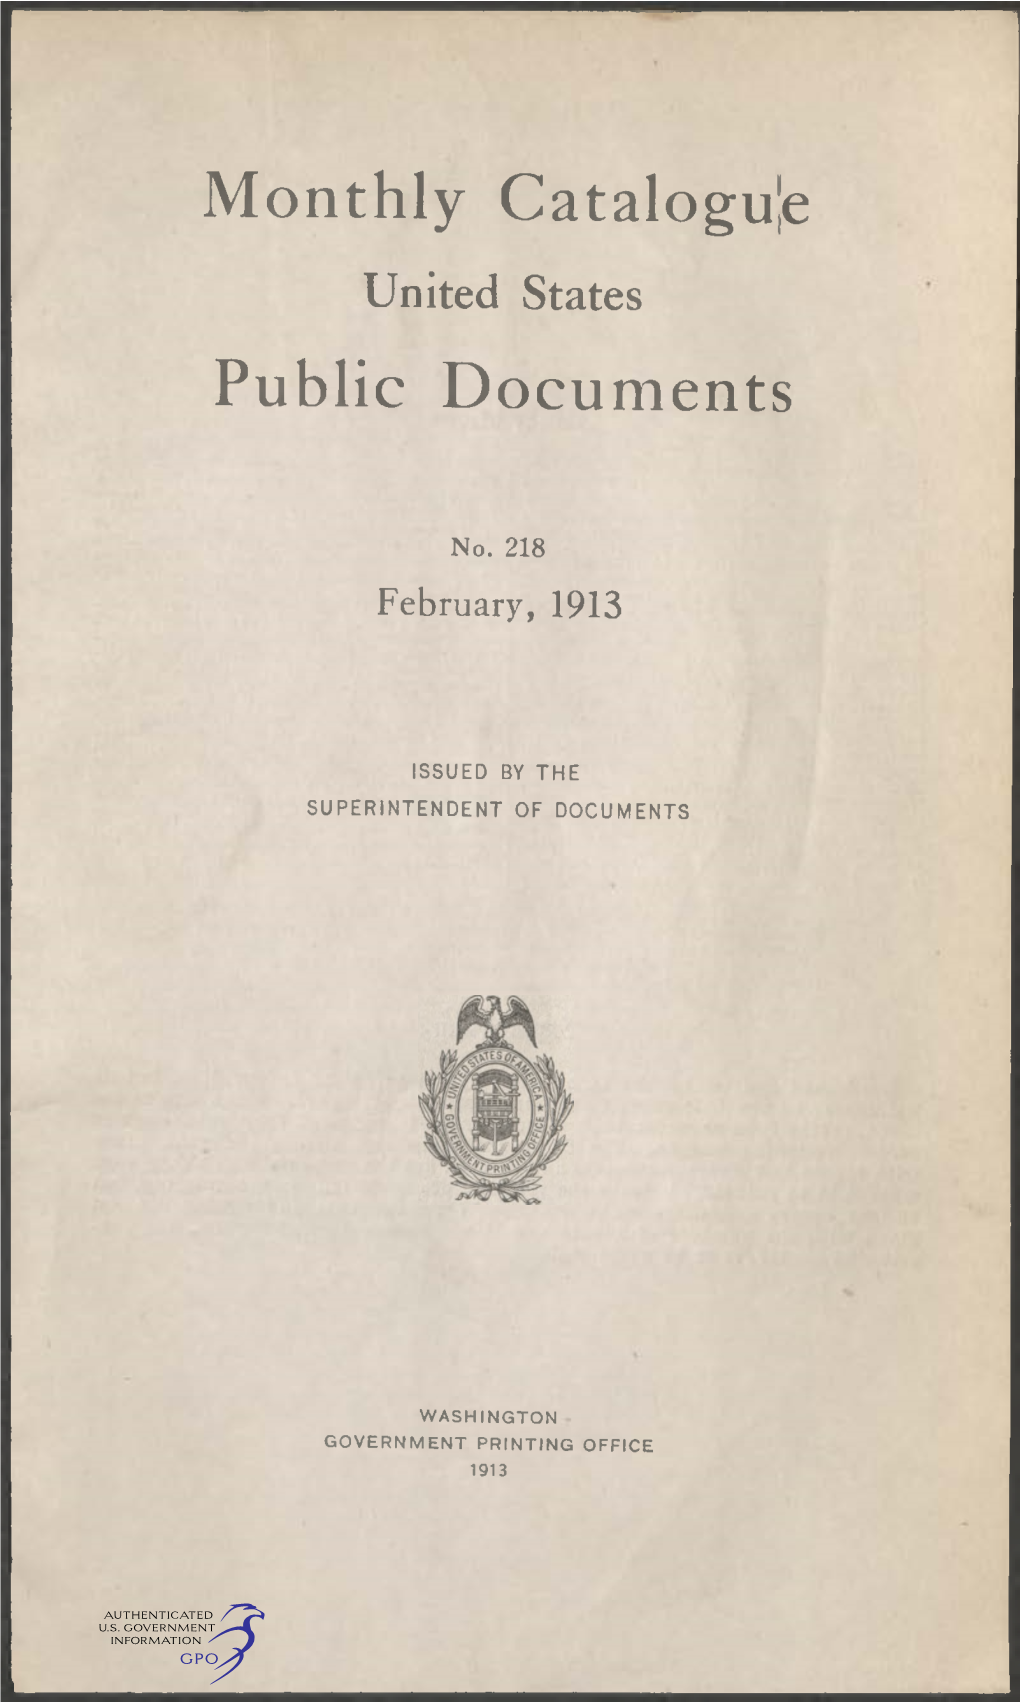 Monthly Catalogue, United States Public Documents, February 1913